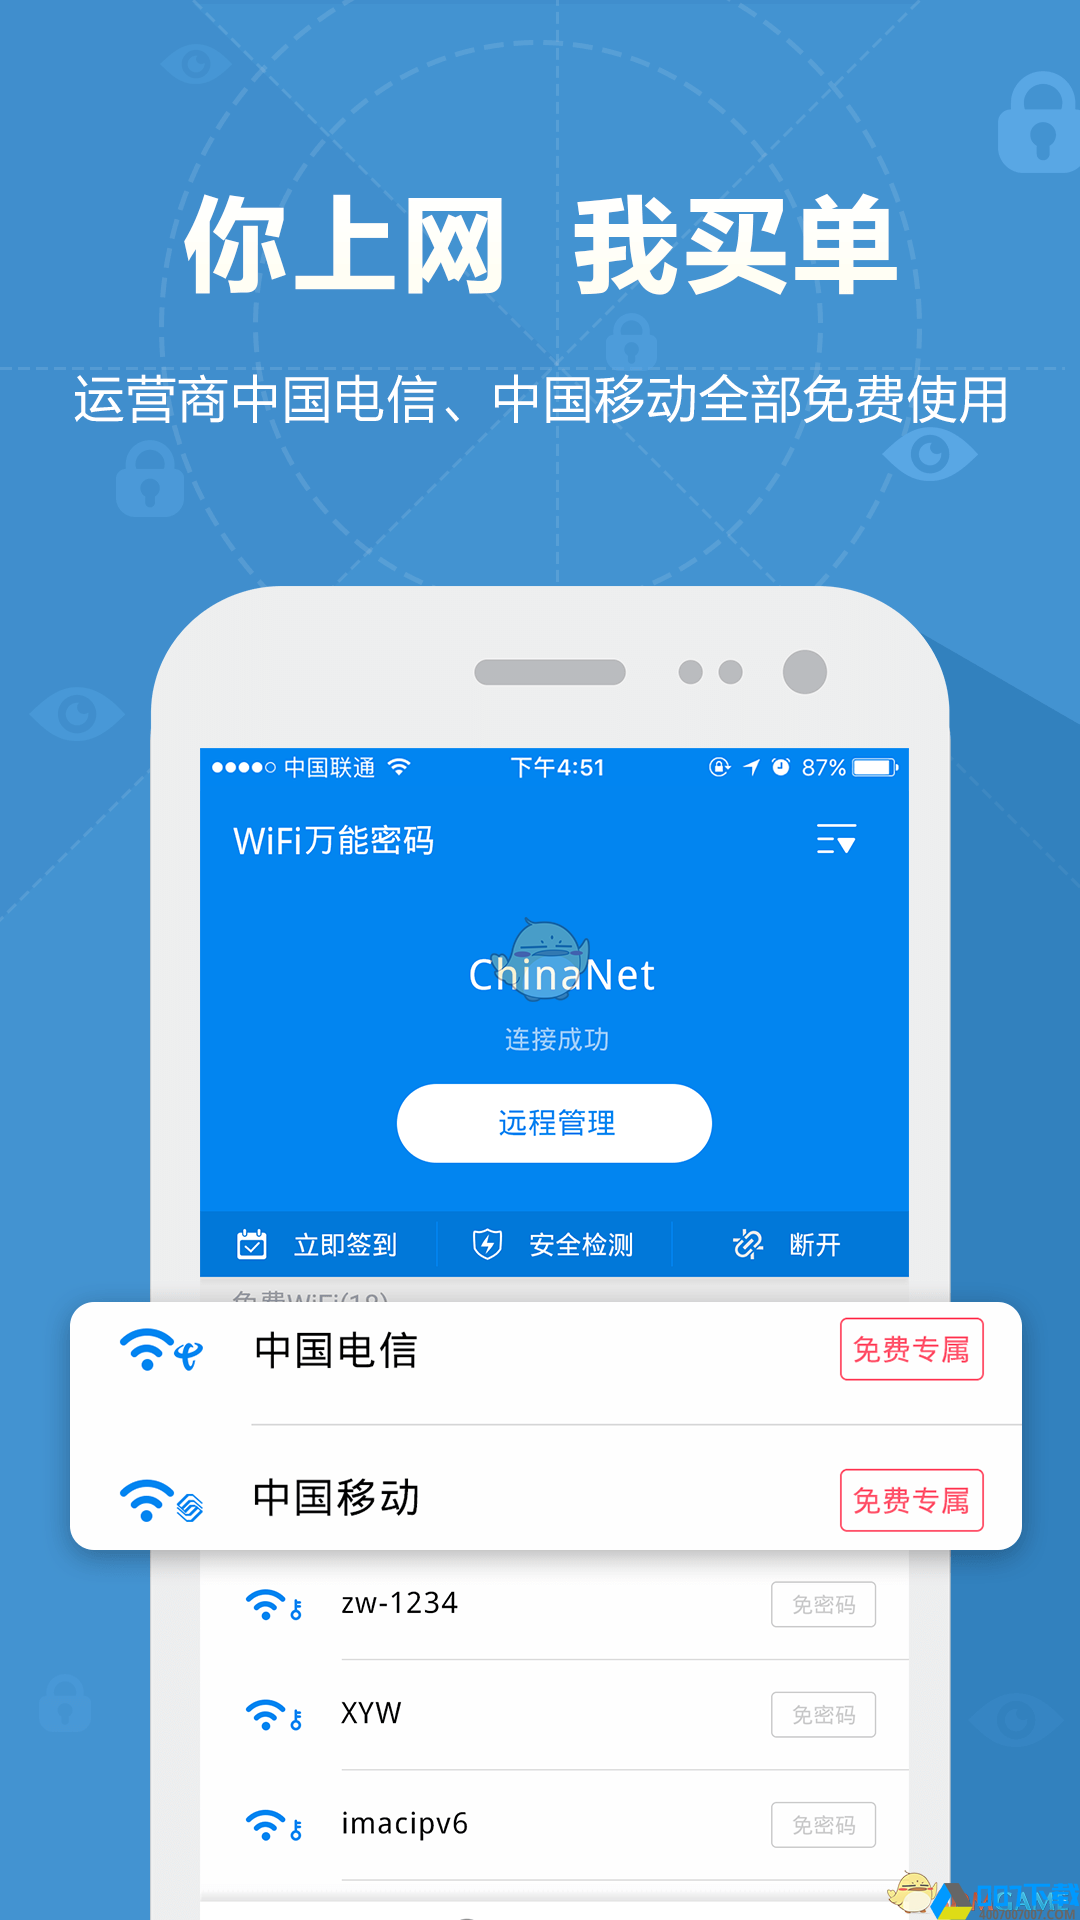 WiFi万能密码钥匙app下载_WiFi万能密码钥匙app最新版免费下载